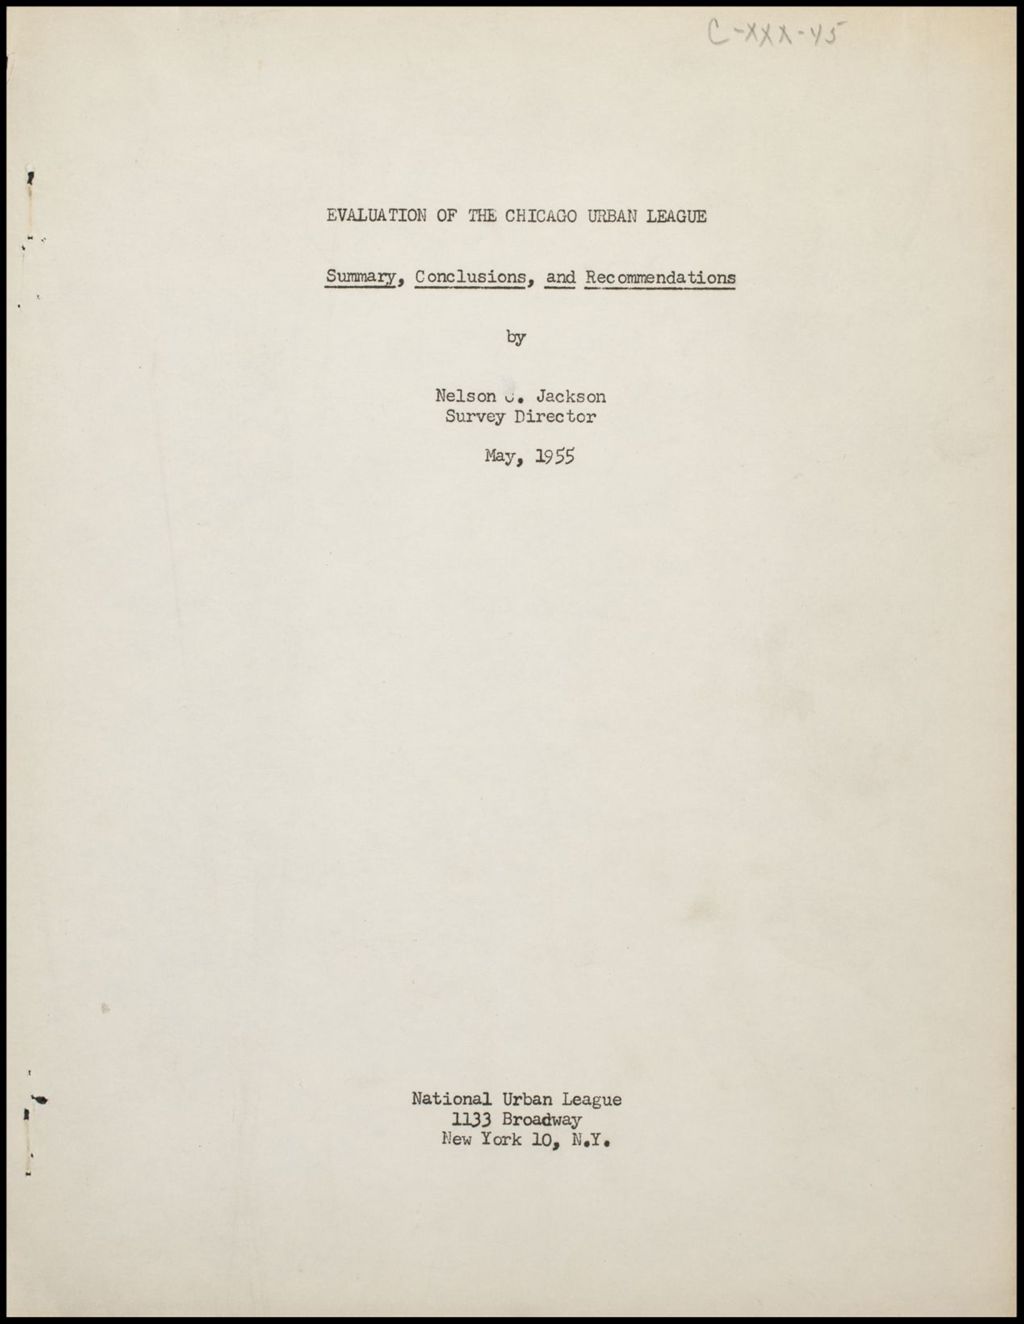 Miniature of Background Study of the Negro Population of Chicago, 1955 (Folder III-2451)